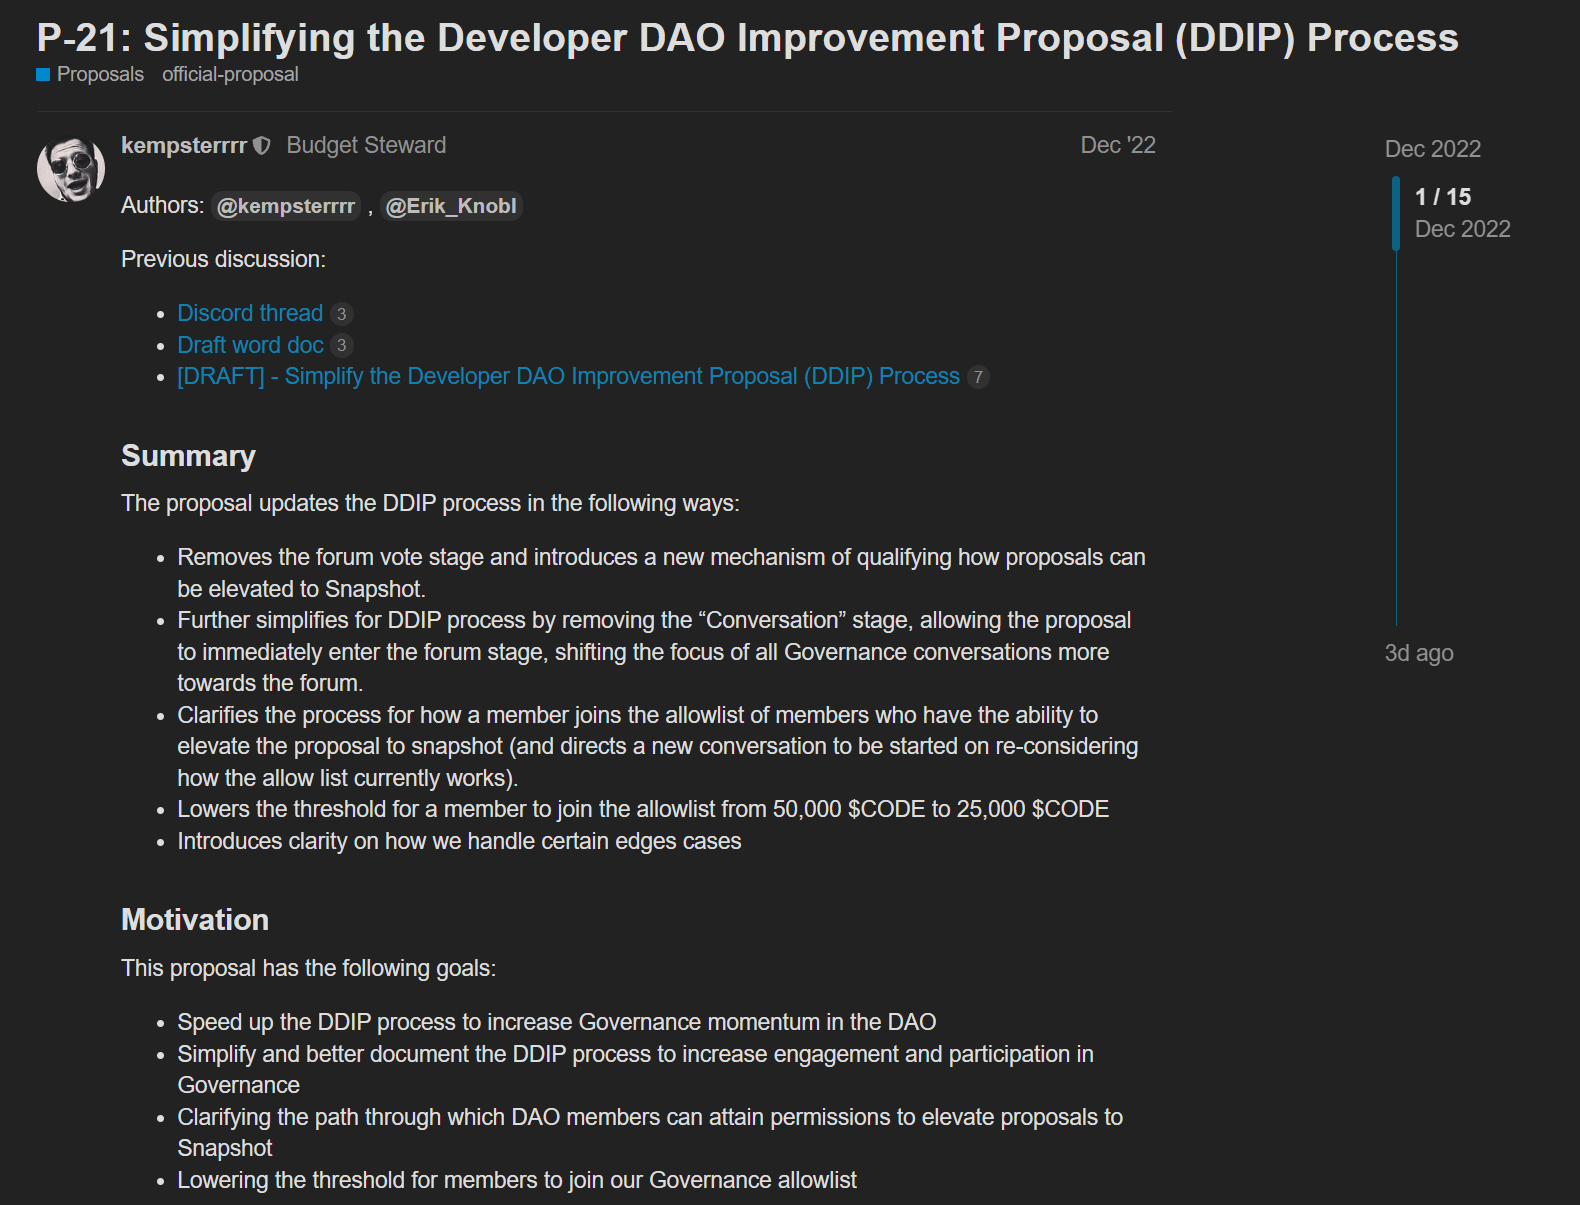 P-21: Simplifying the Developer DAO Improvement Proposal Process